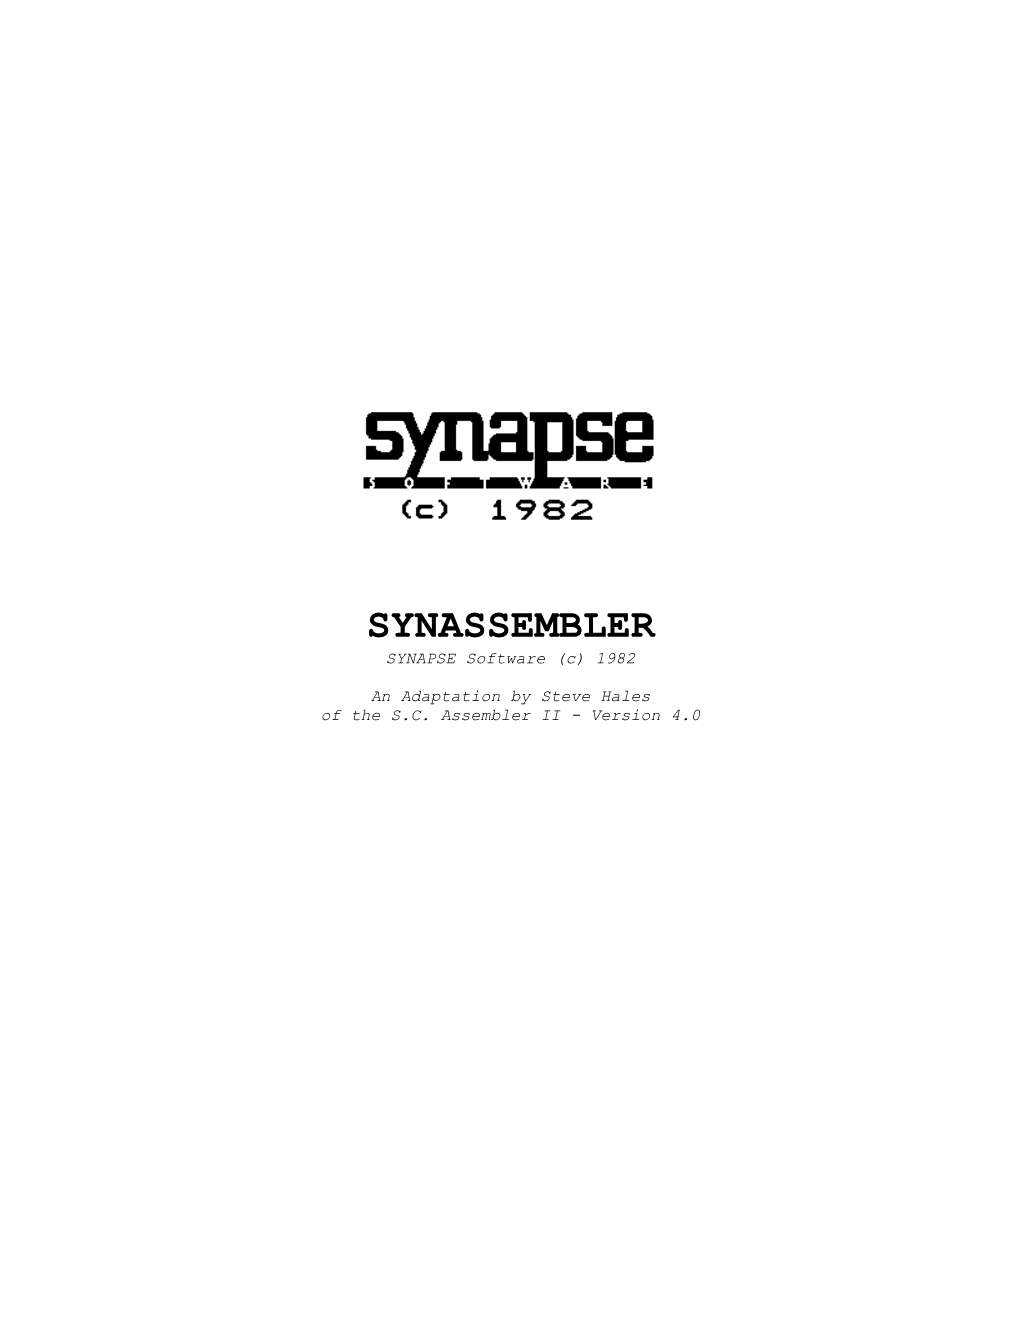 SYNASSEMBLER SYNAPSE Software (C) 1982